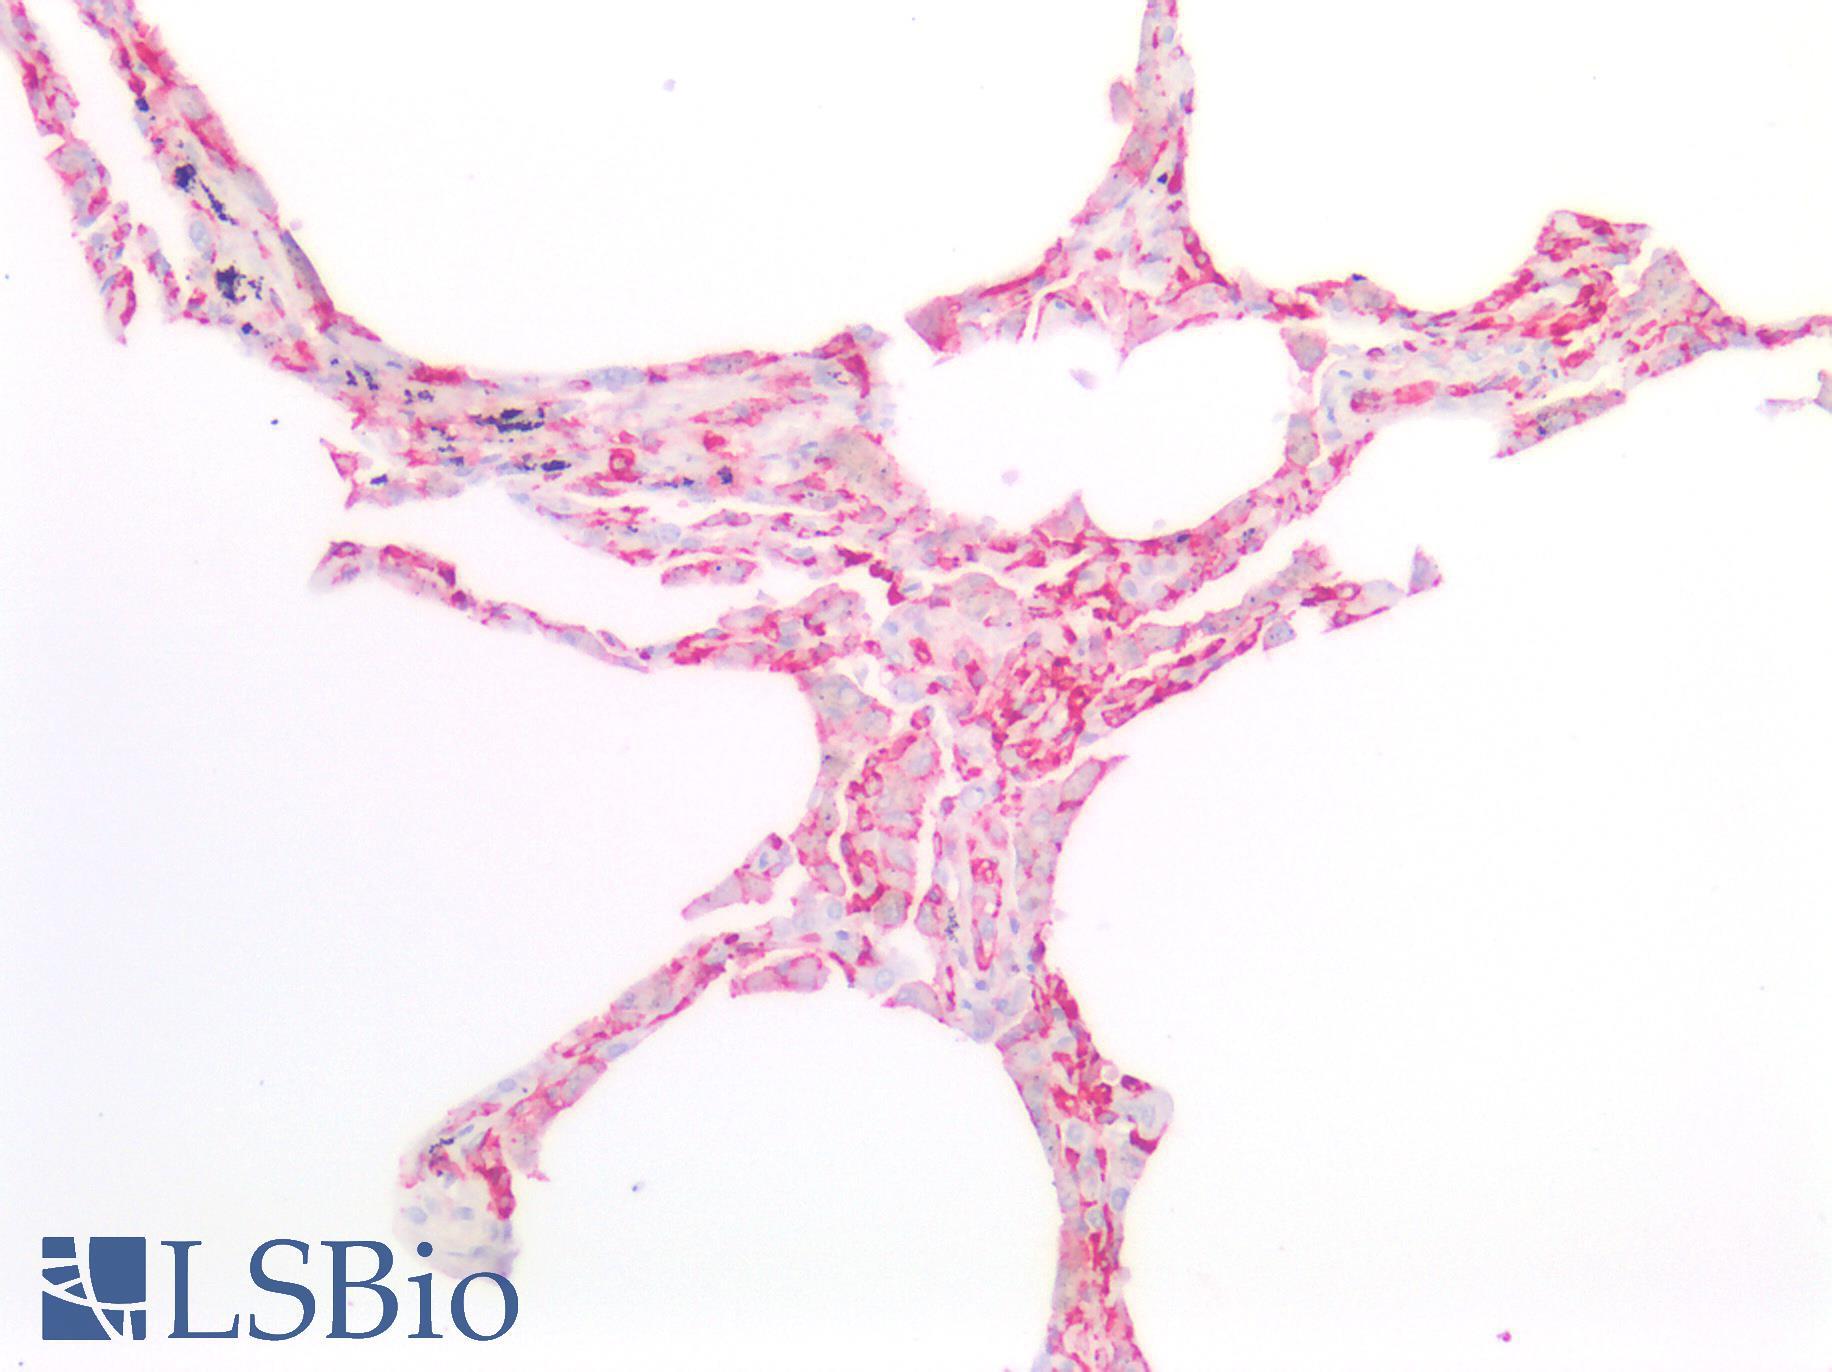 PECAM-1 / CD31 Antibody - Human Lung: Formalin-Fixed, Paraffin-Embedded (FFPE)